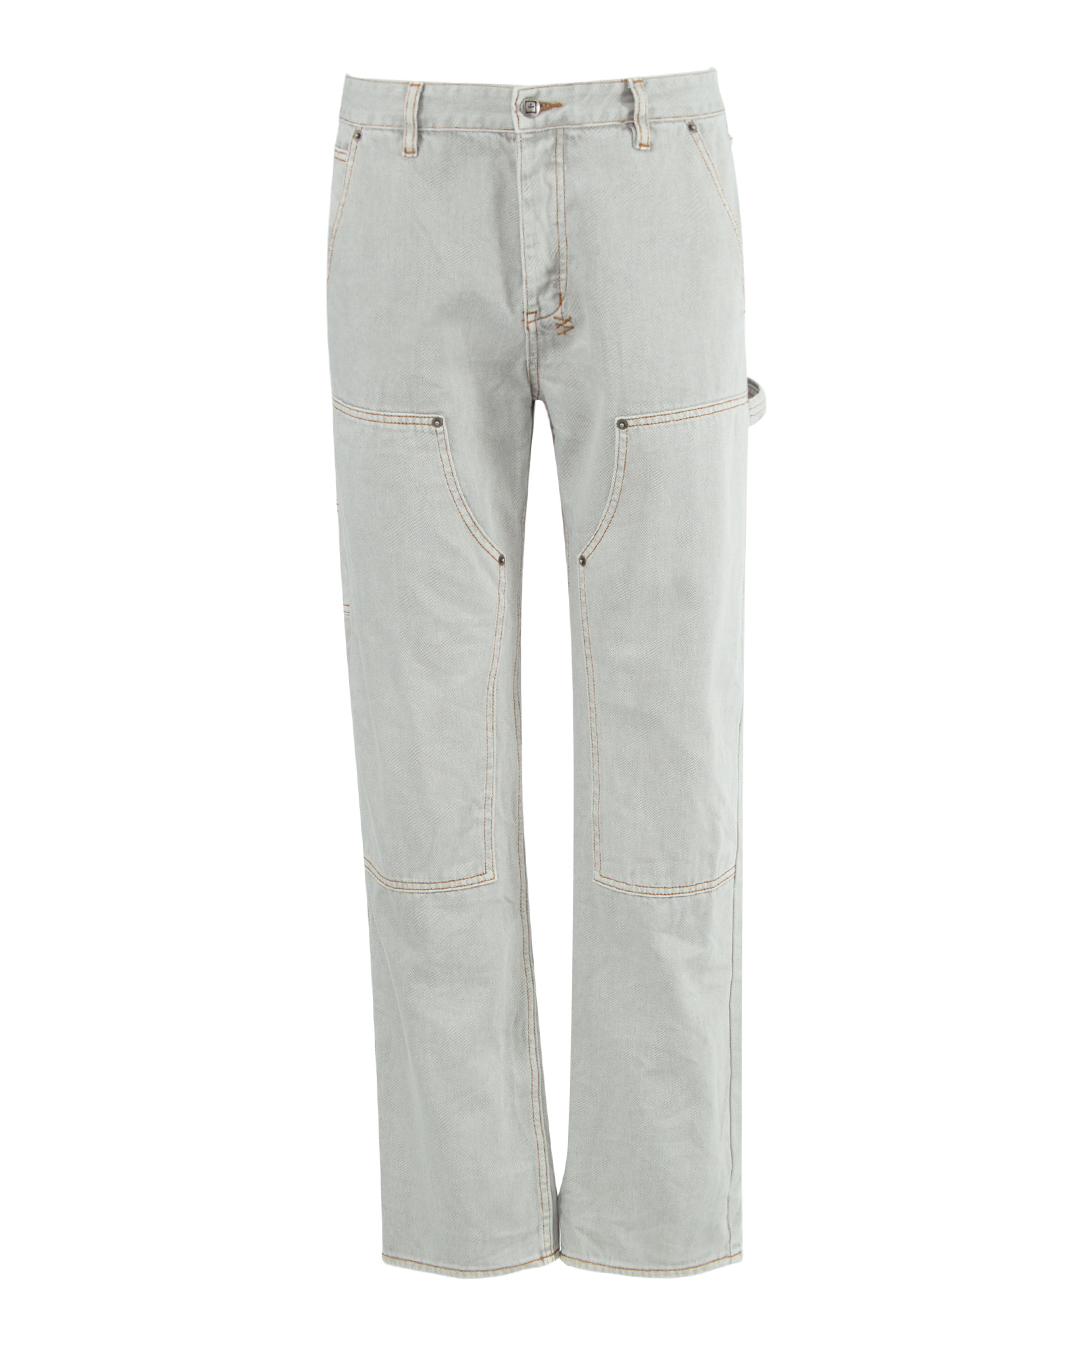 джинсы KSUBI MPF23PA011 серый 31, размер 31 - фото 1